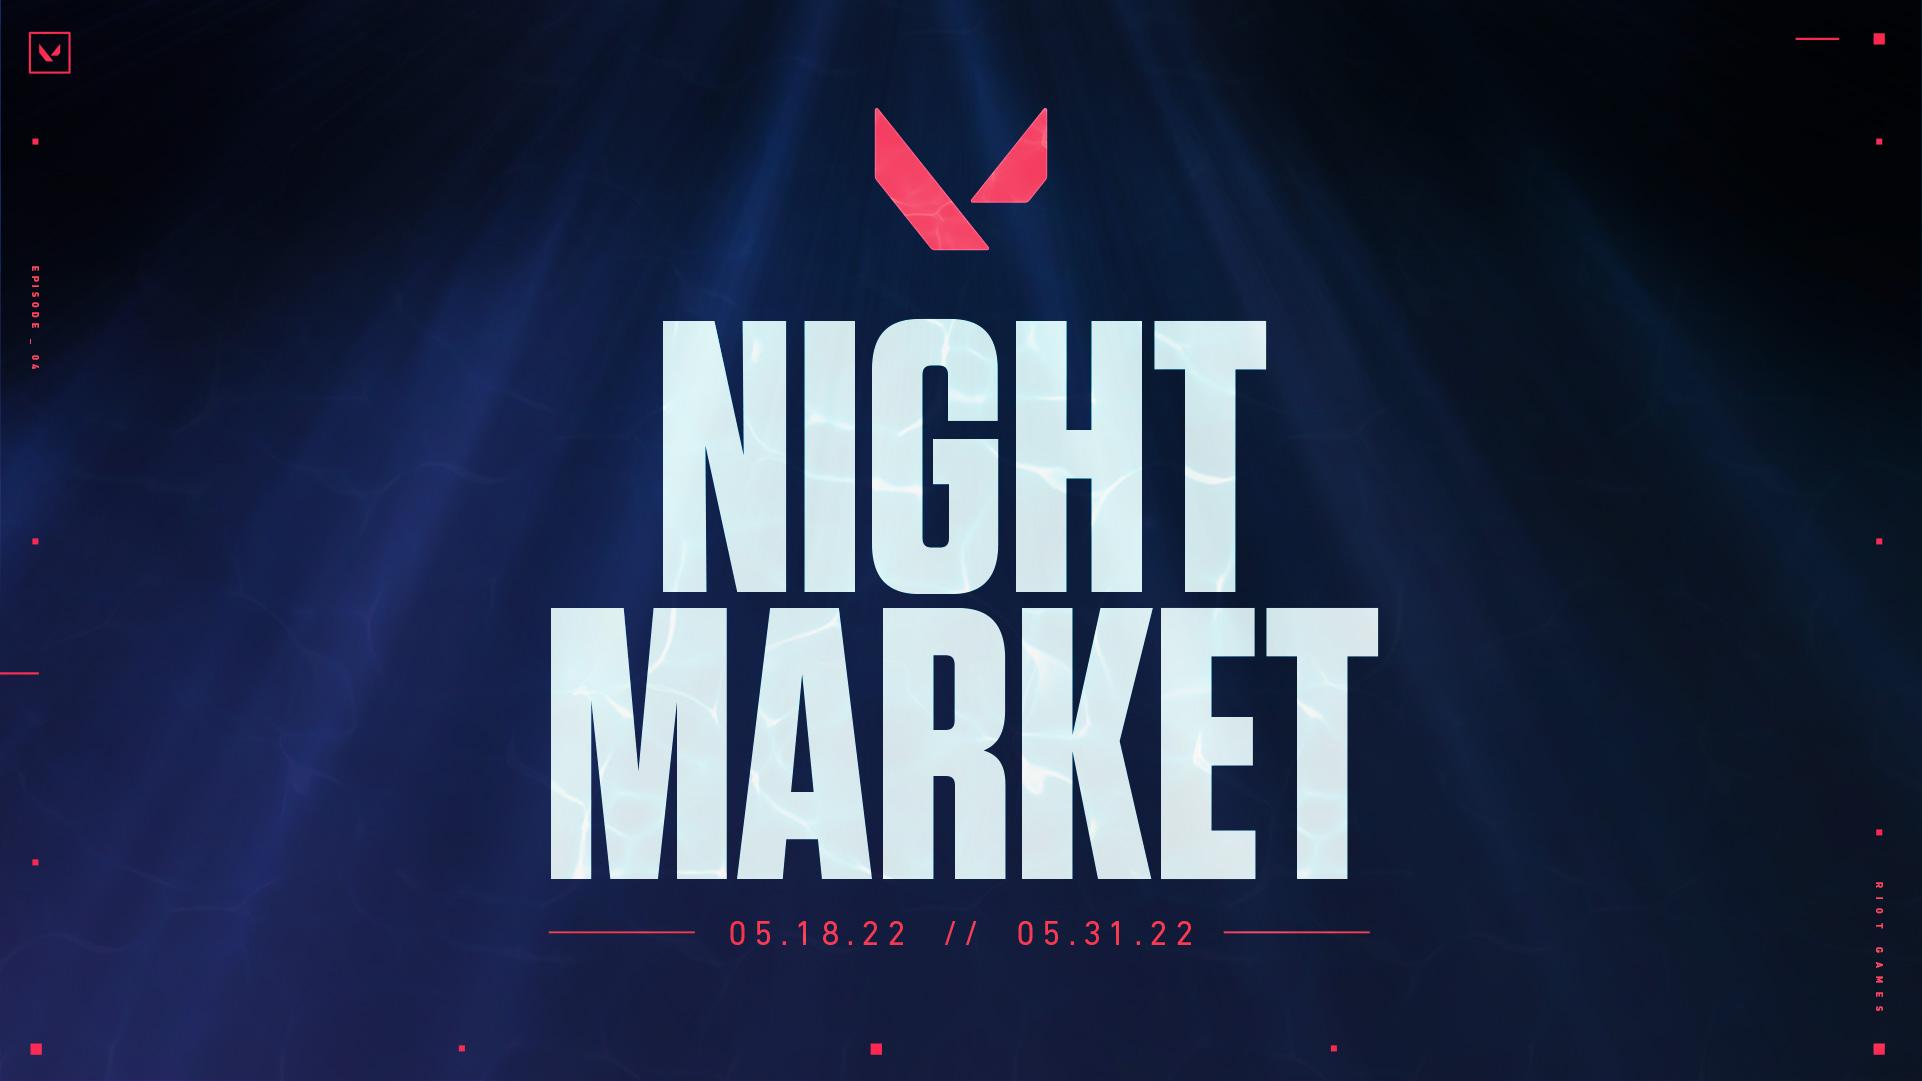 Night. Market returns